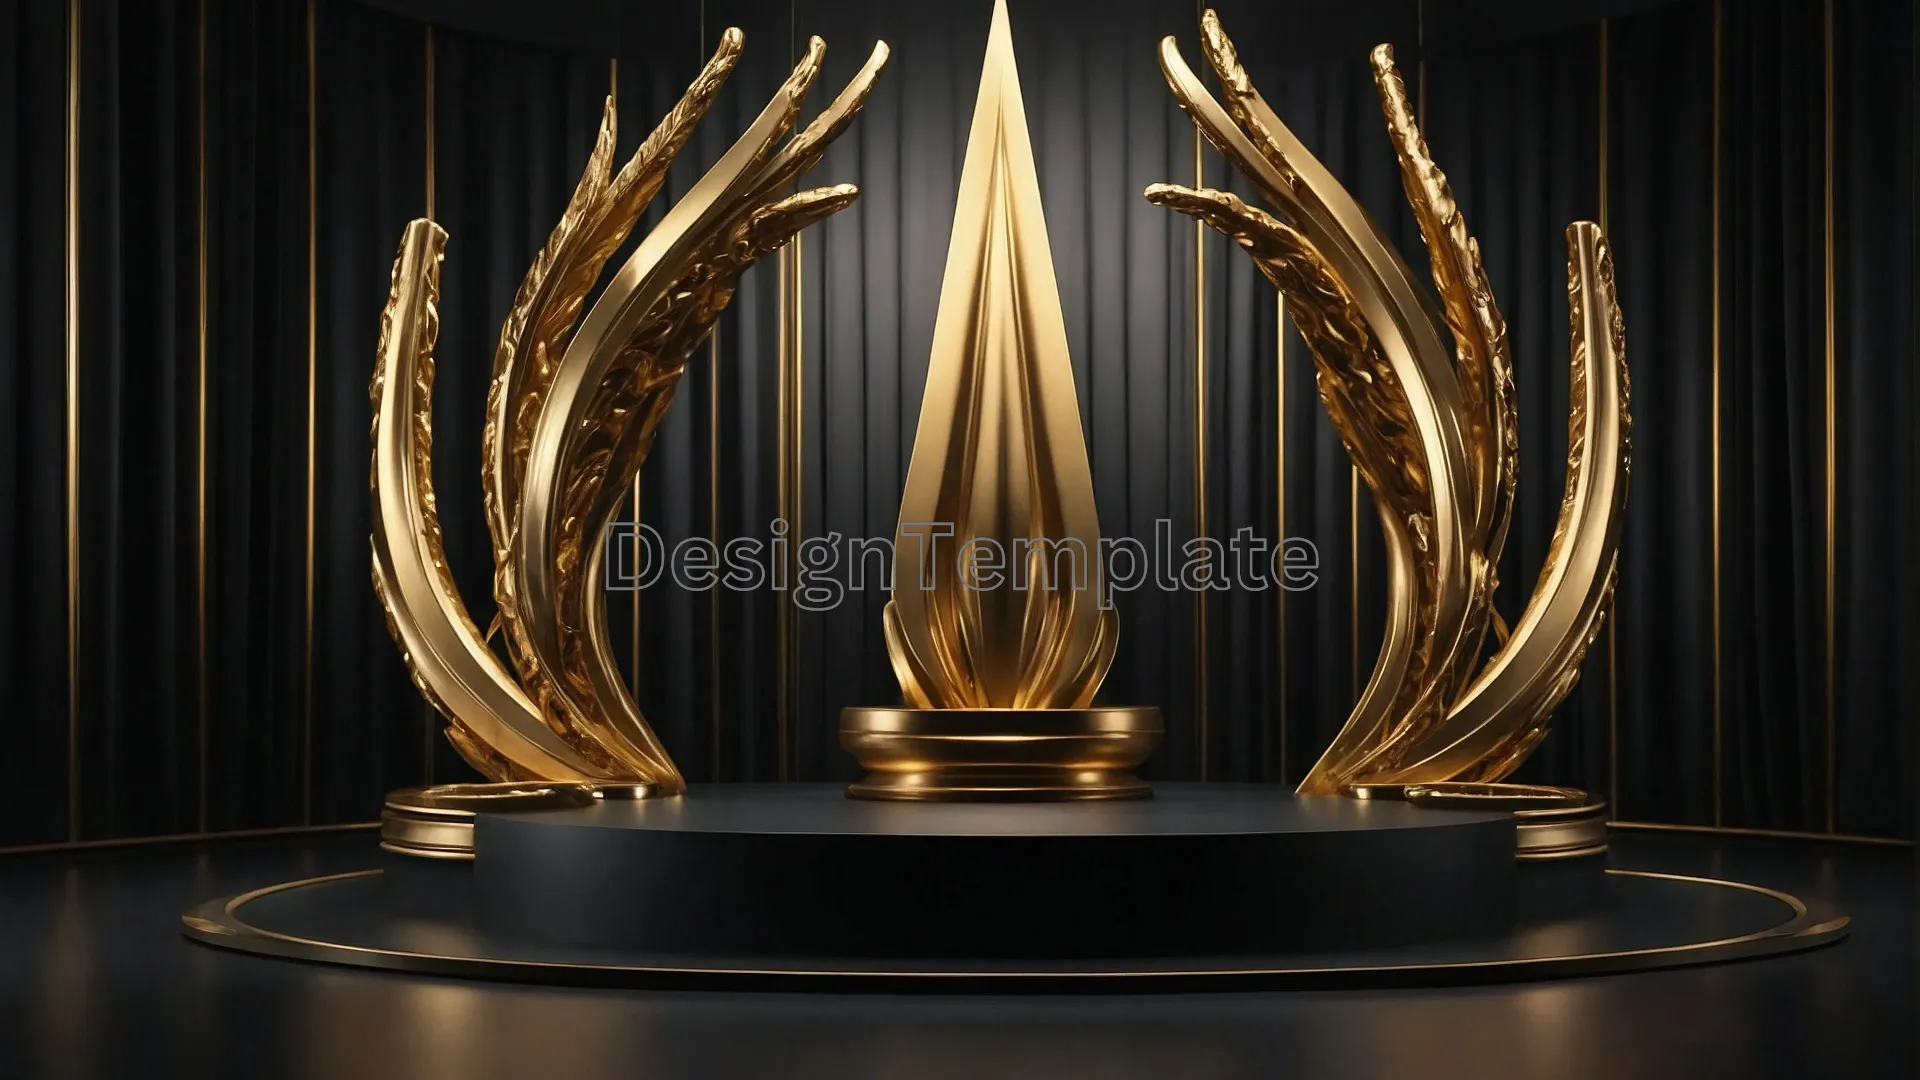 Luxurious Award Show Podium with Golden Background